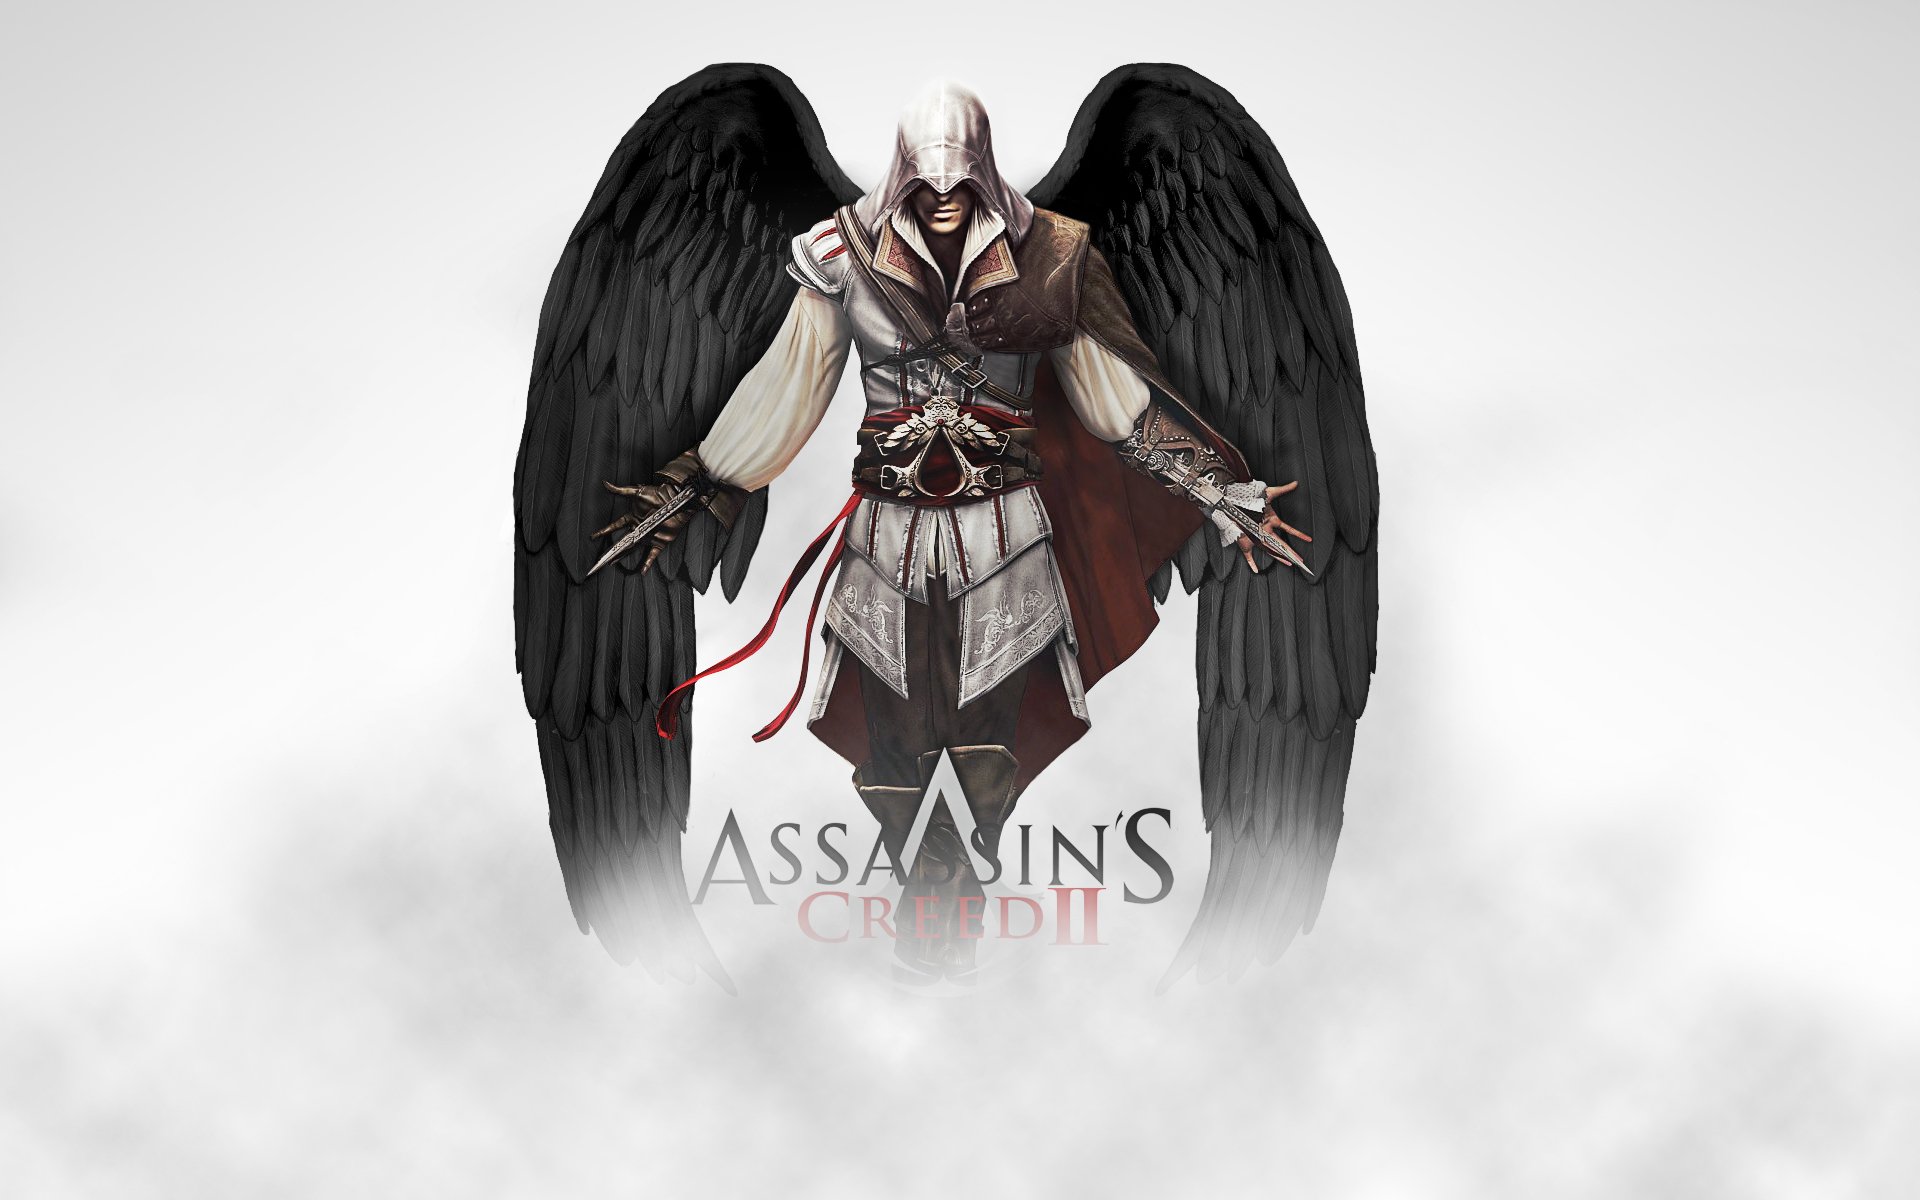 Assassin's Creed II desktop wallpaper, featuring a striking video game artwork.